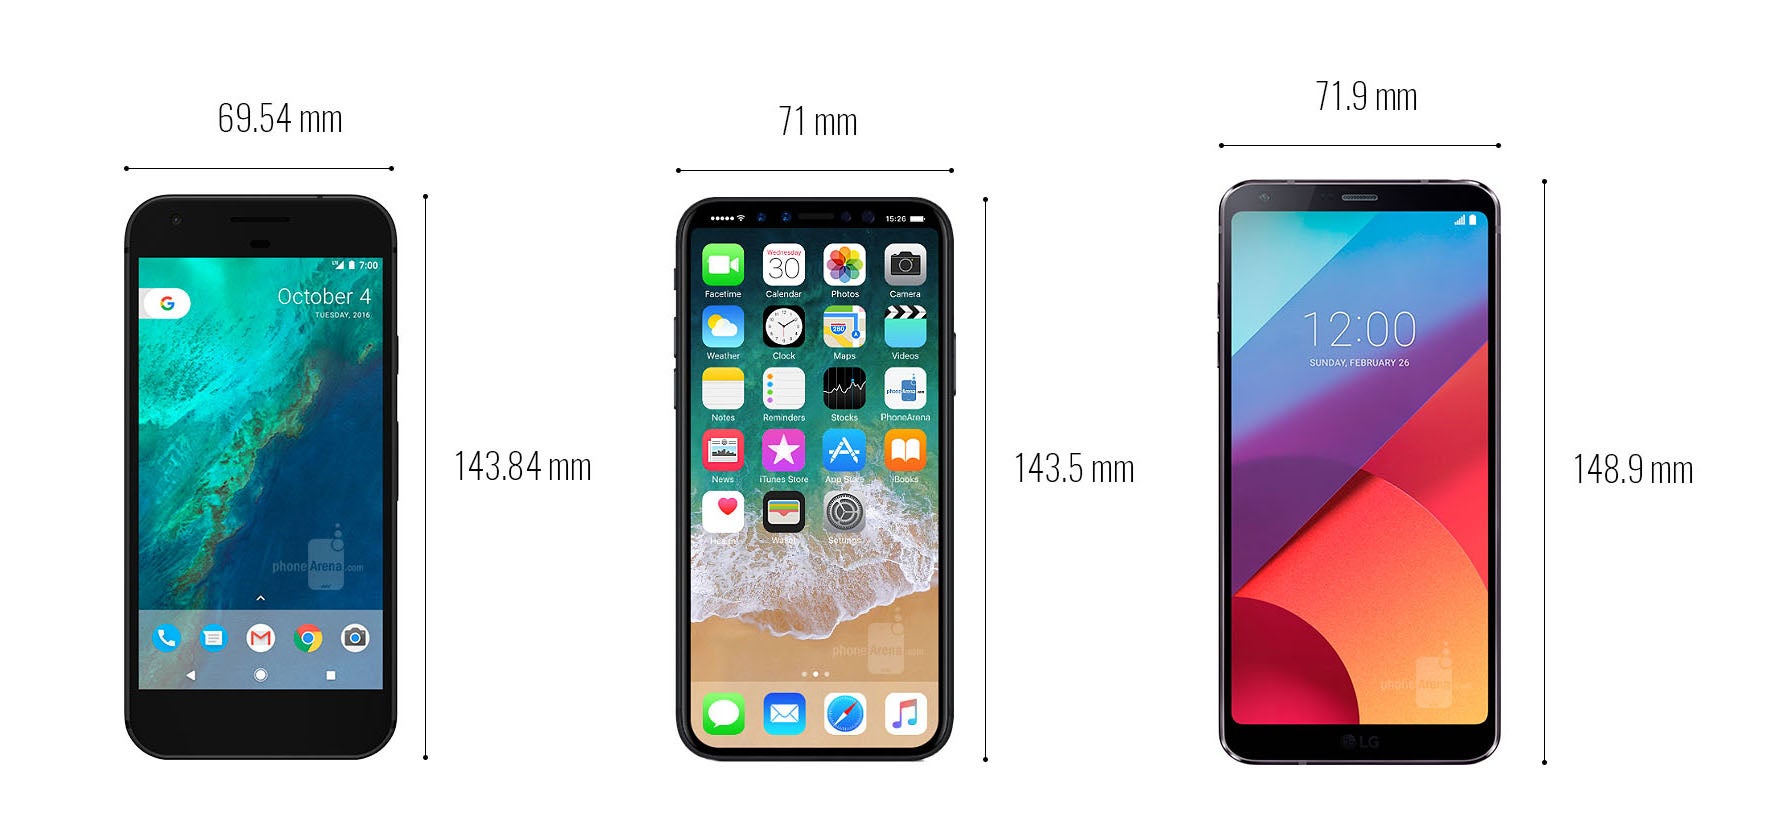 iPhone 8 vs iPhone 7/7Plus, Galaxy S8/S8+, LG G6, Google Pixel: size comparison